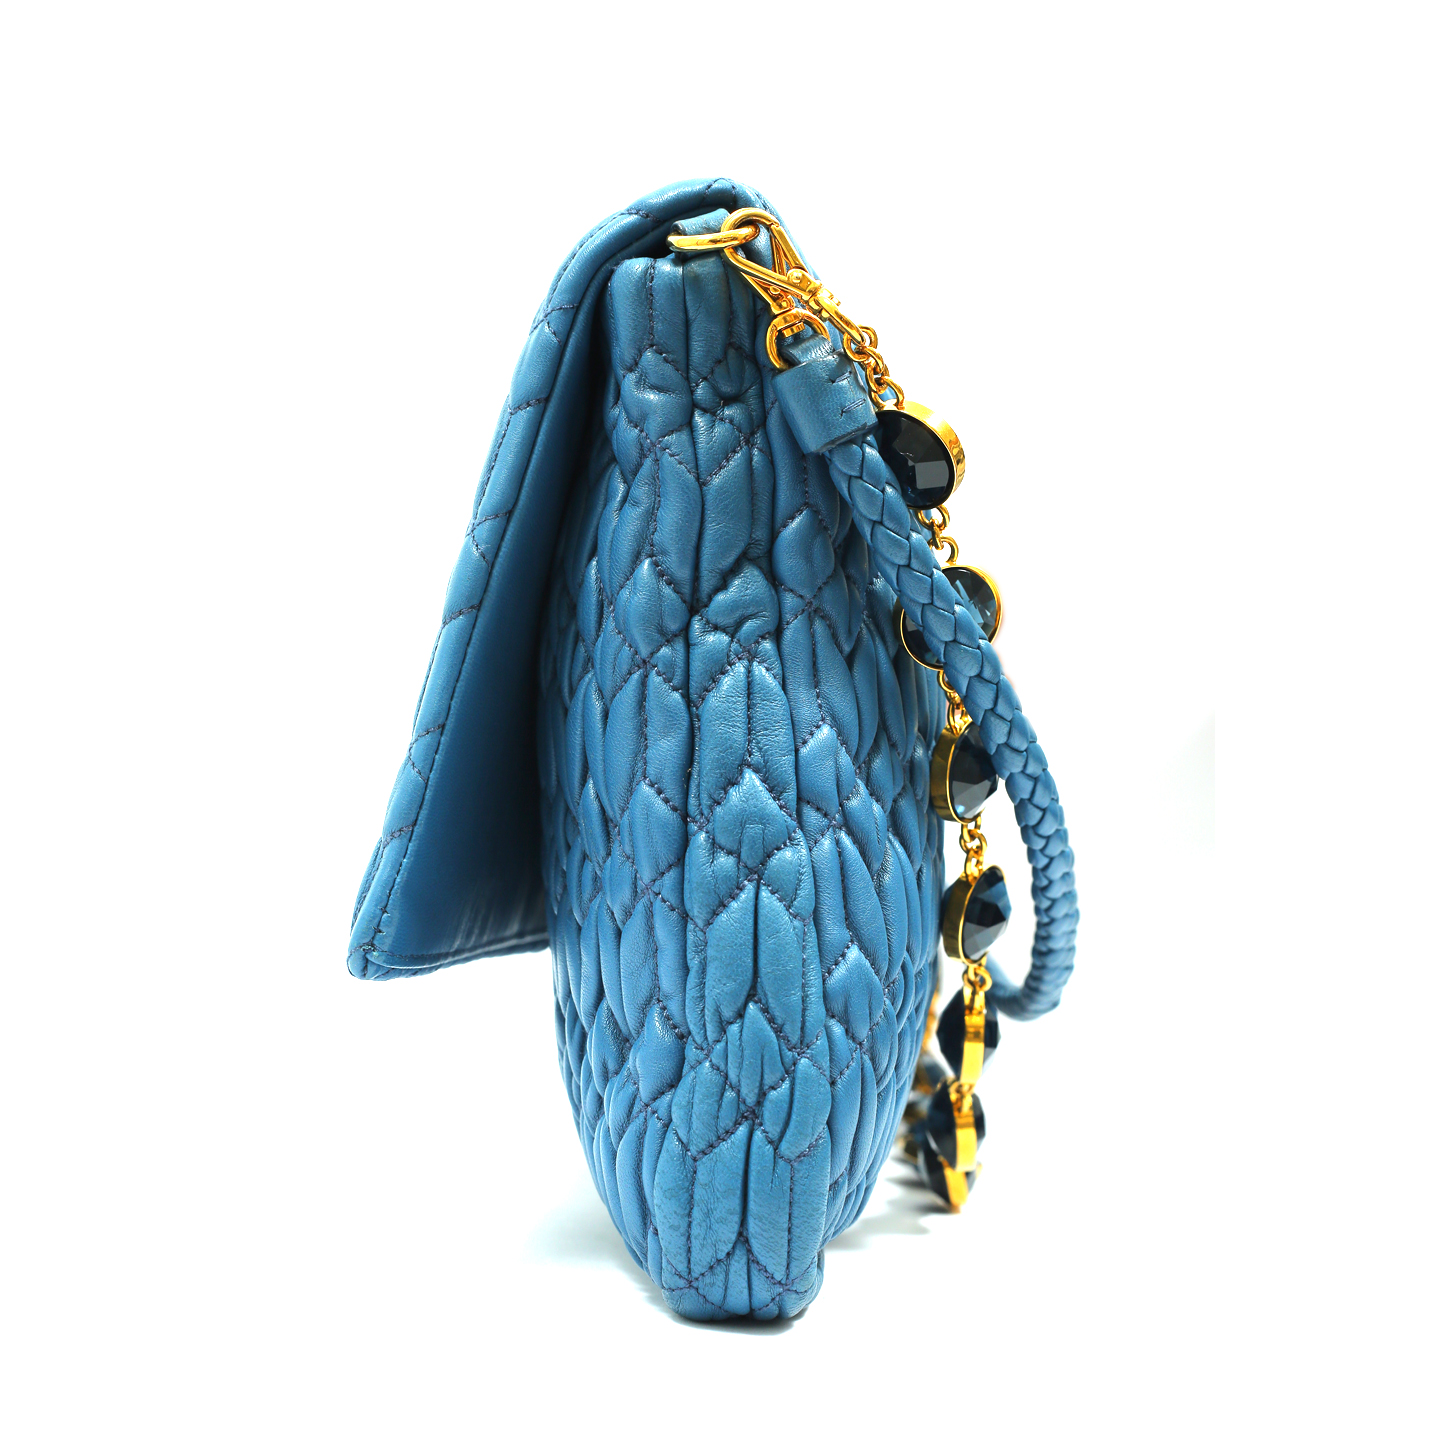 Leather handbag Miu Miu Blue in Leather - 25092141